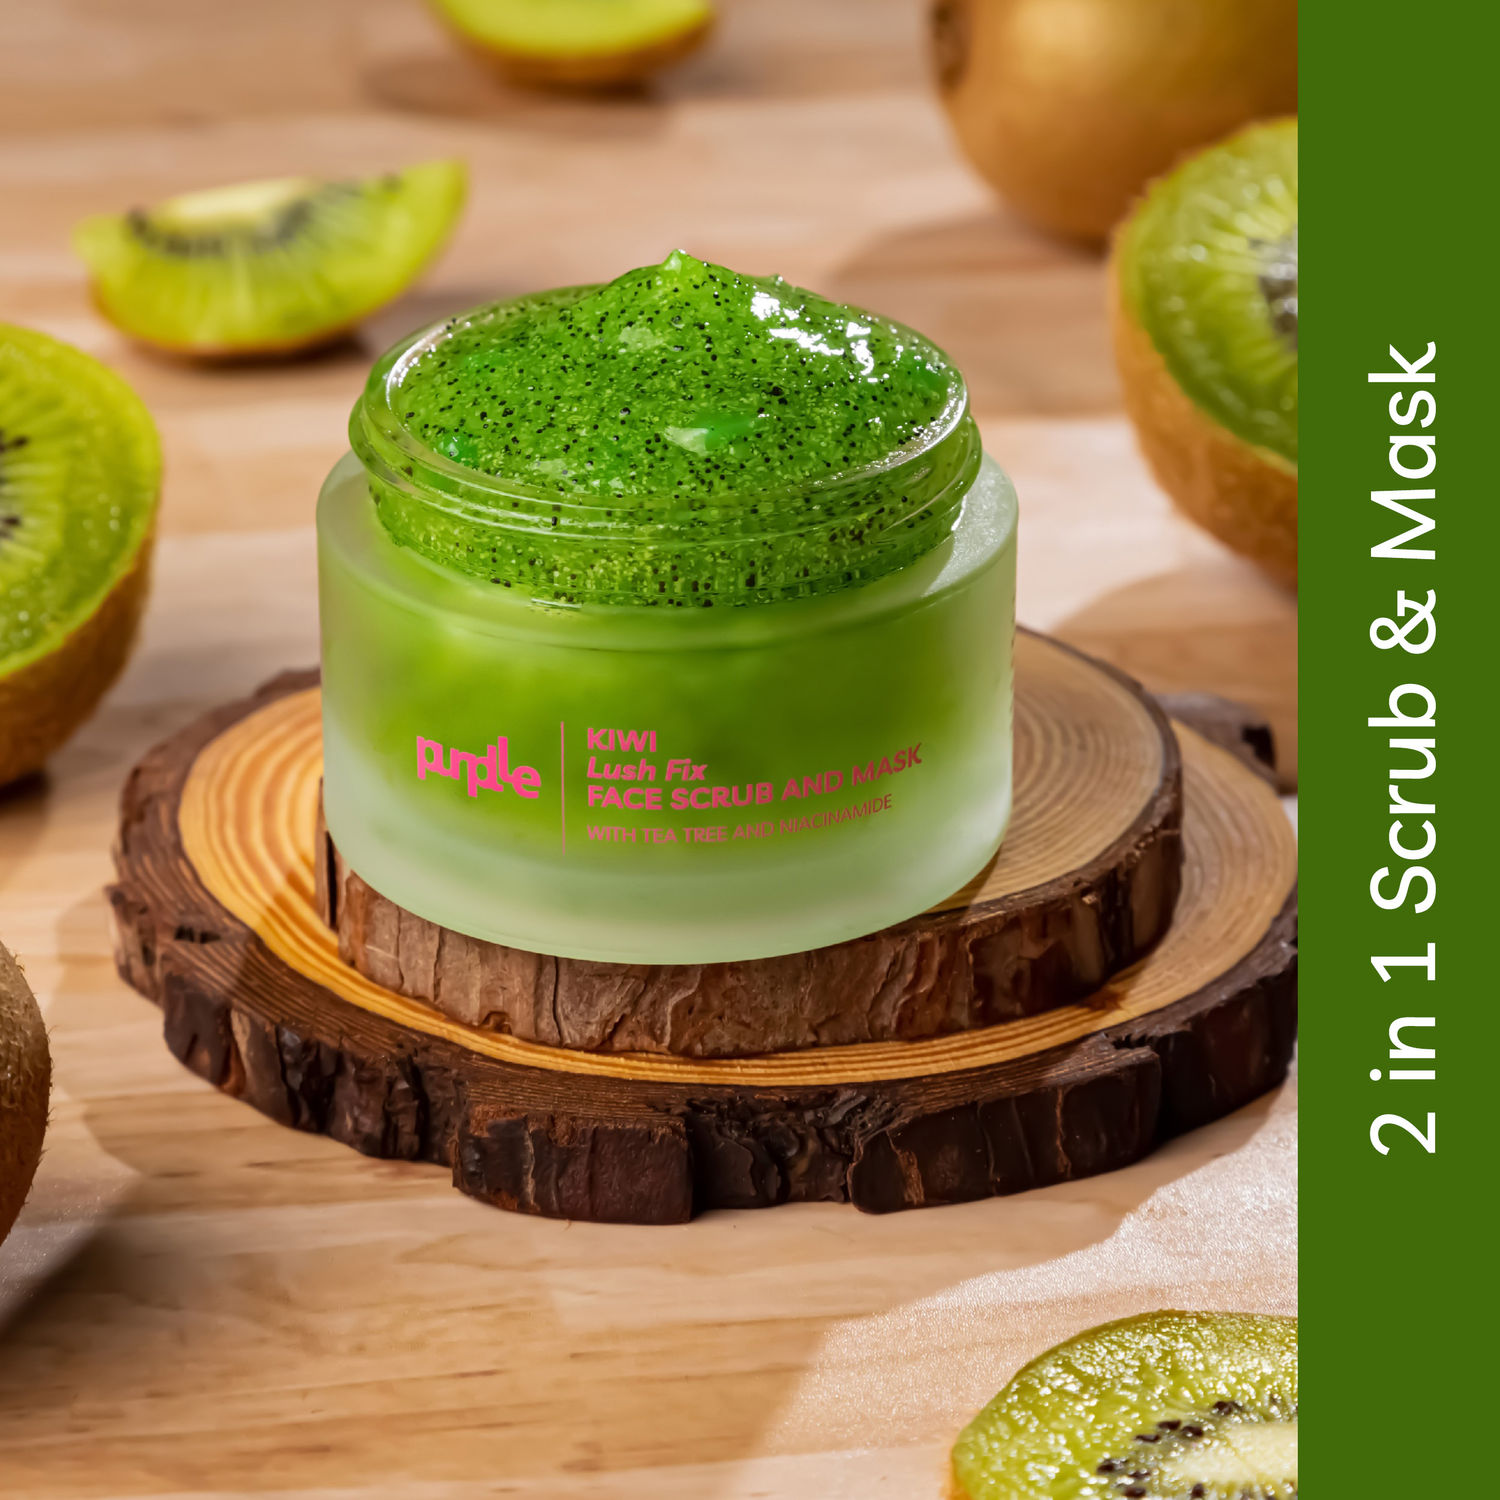 Purplle Kiwi Lush Fix Face Scrub and Mask with Tea Tree and Niacinamide (50  gm)